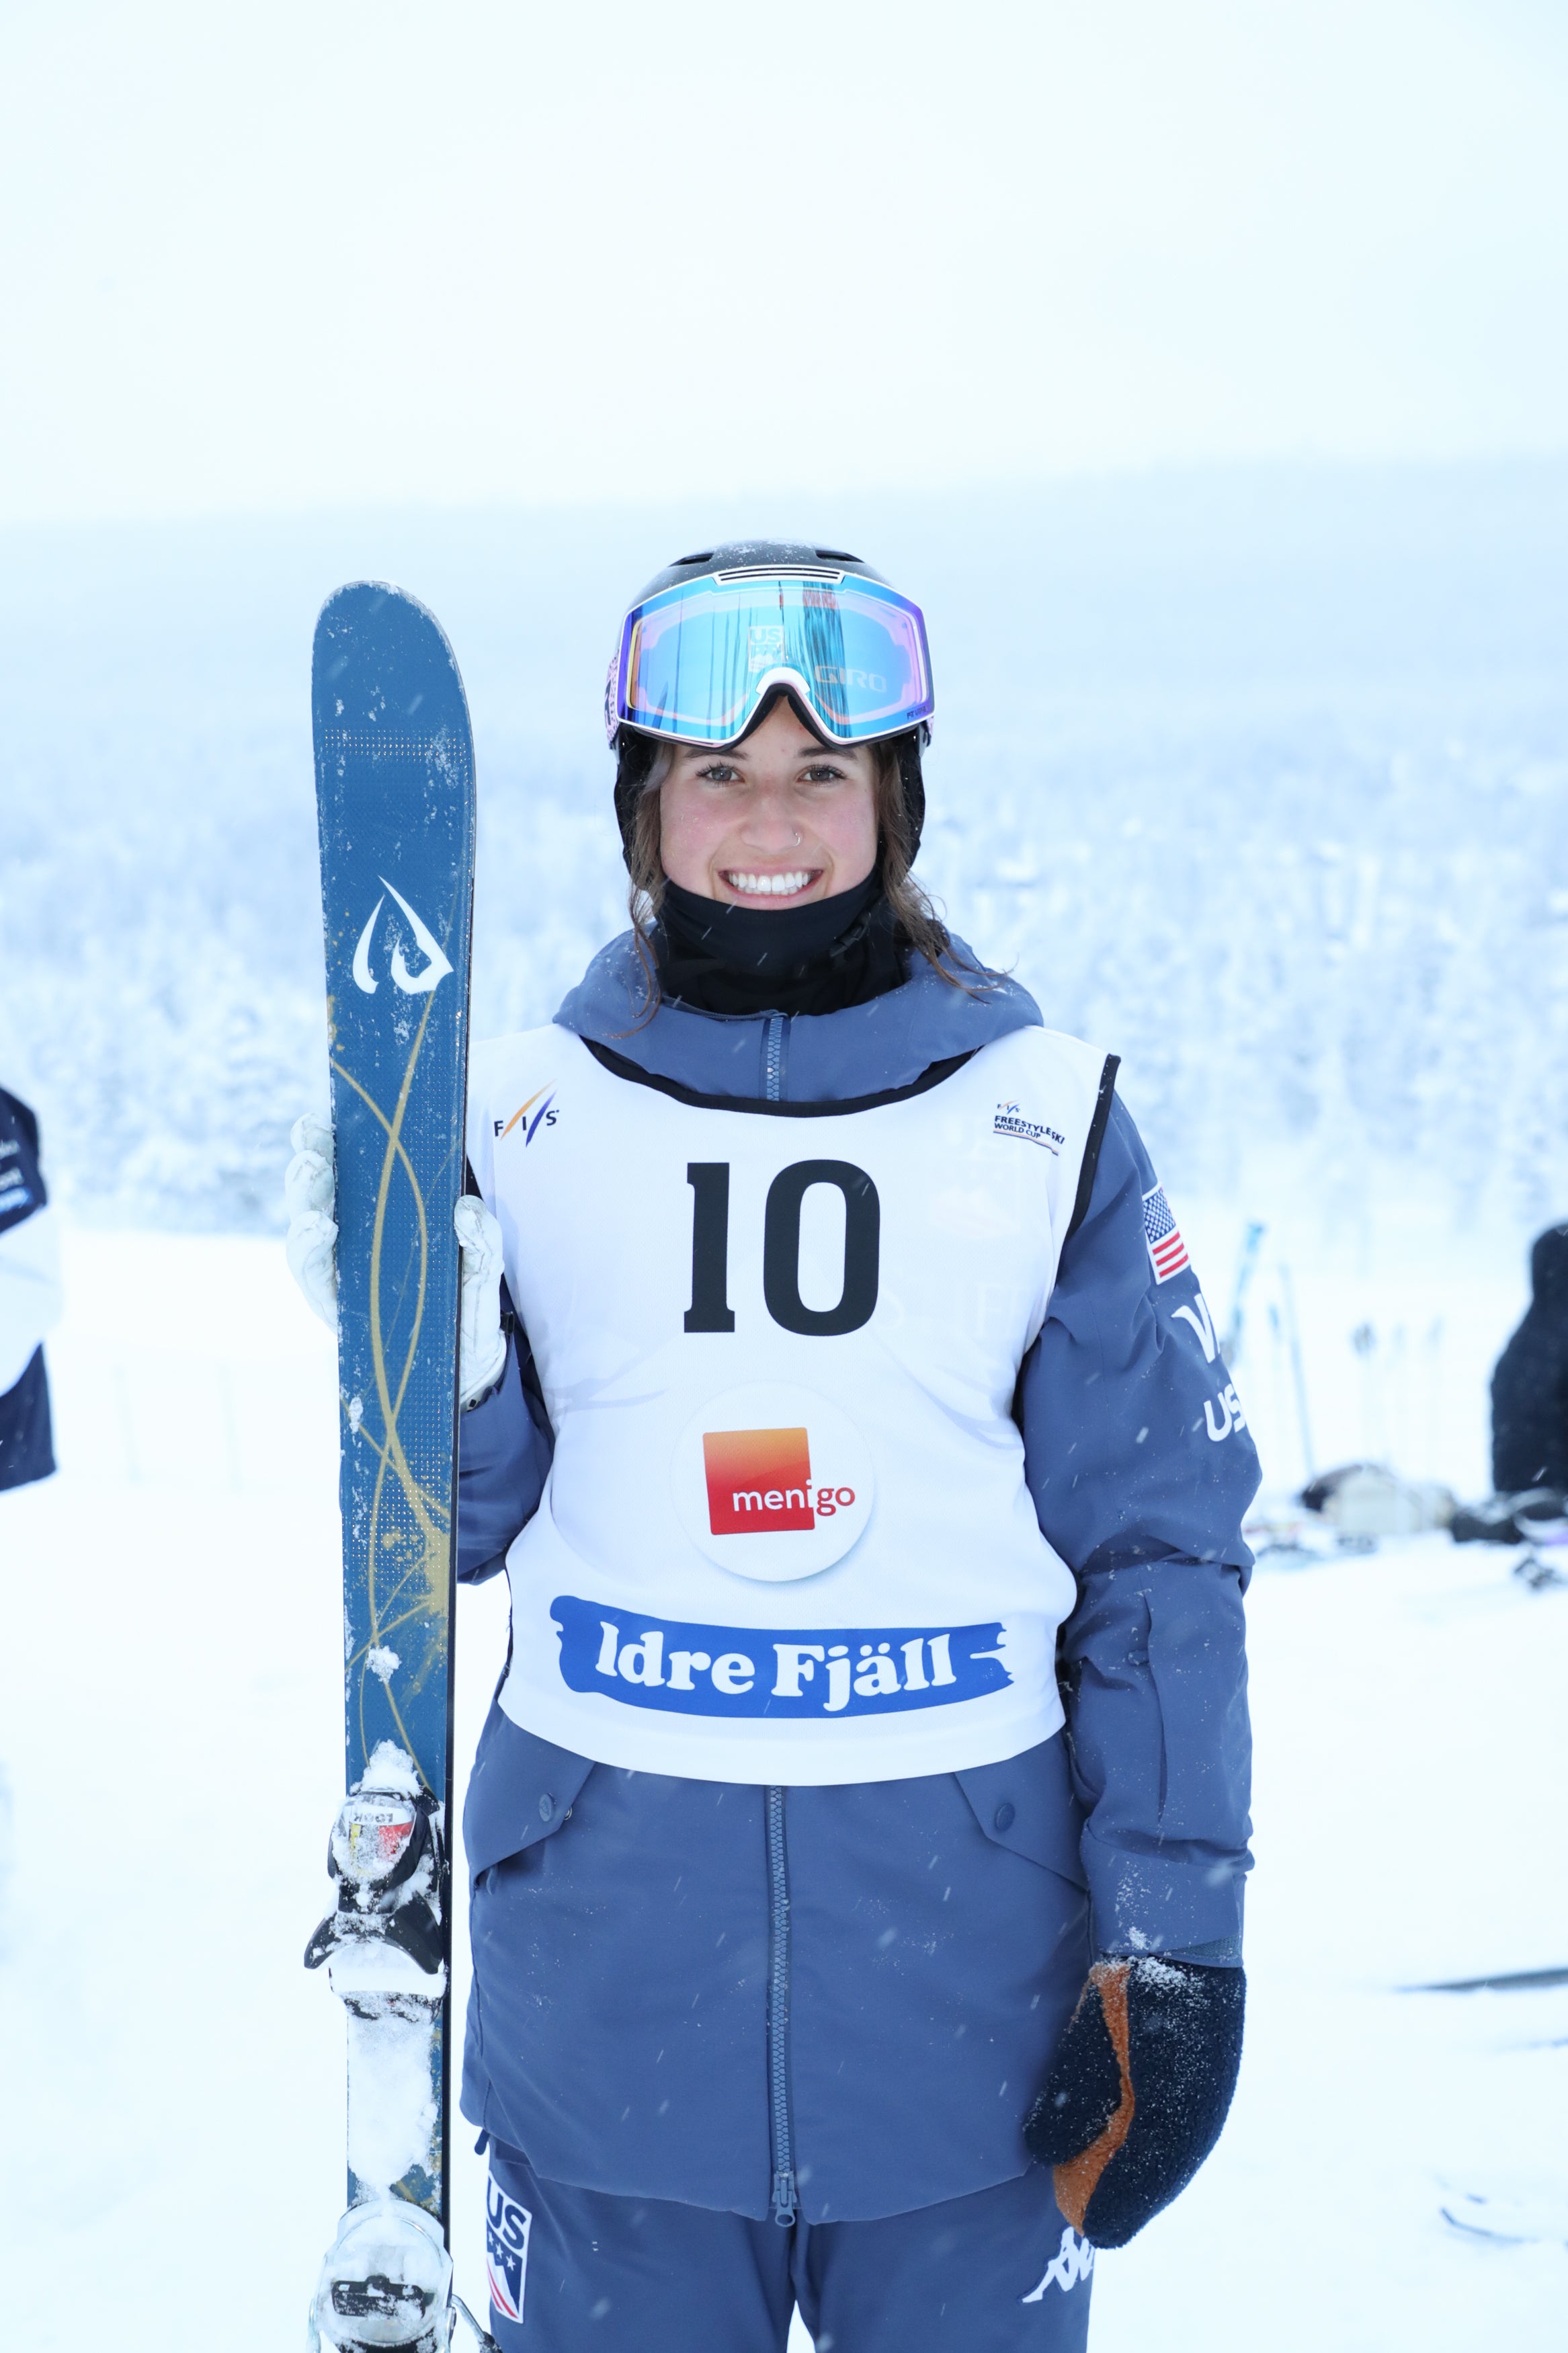 Photo of Alli Macuga - Mogul Skier